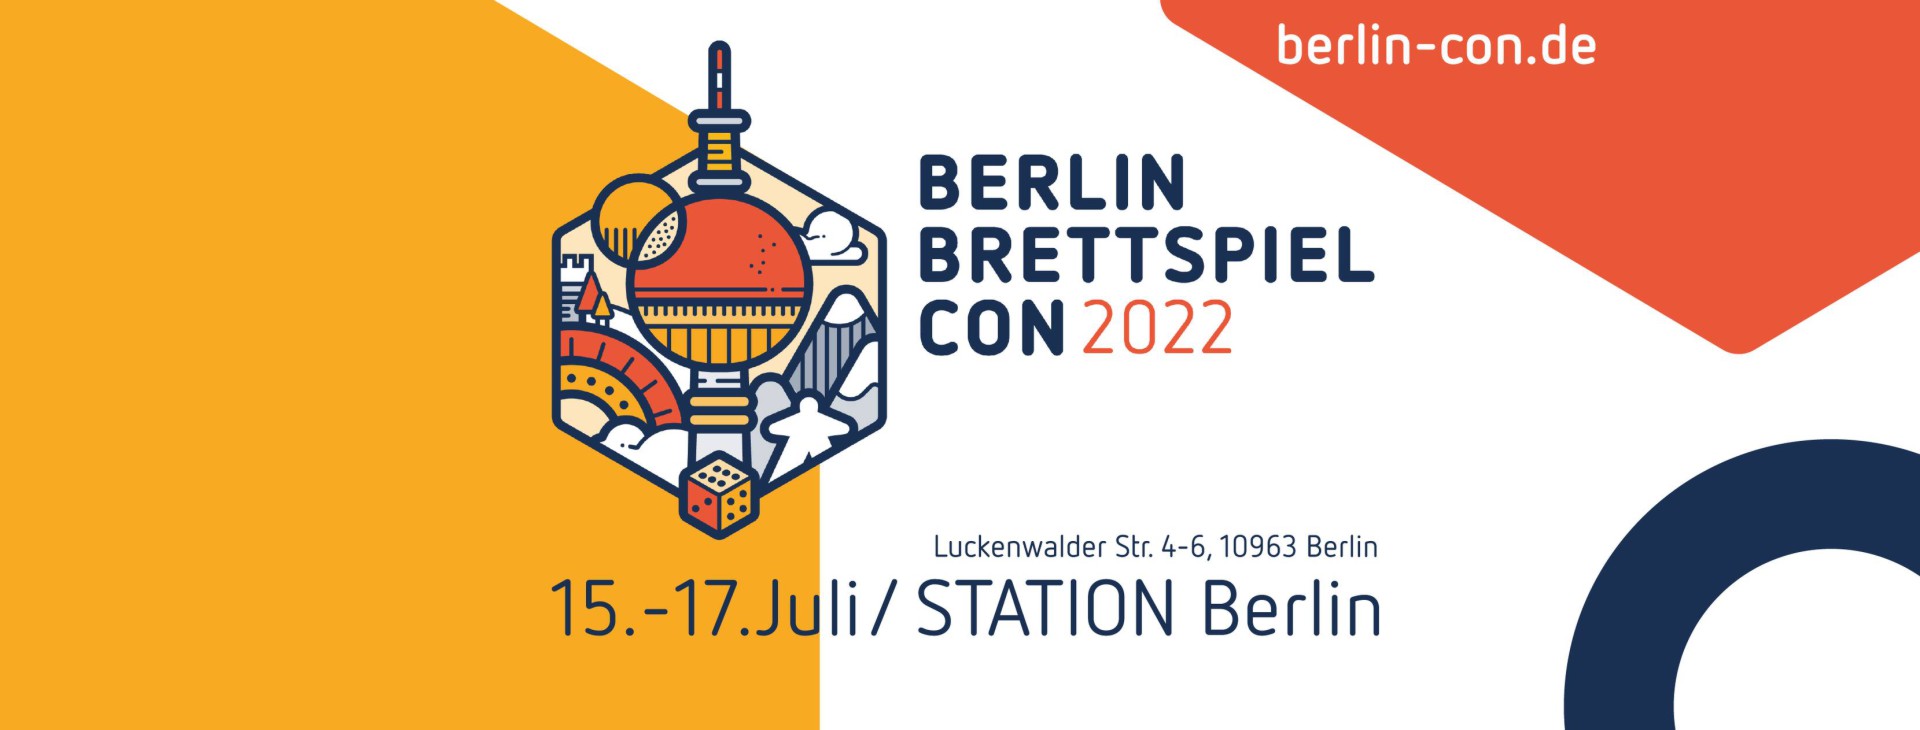 Berlin, Brettspiele, Convention